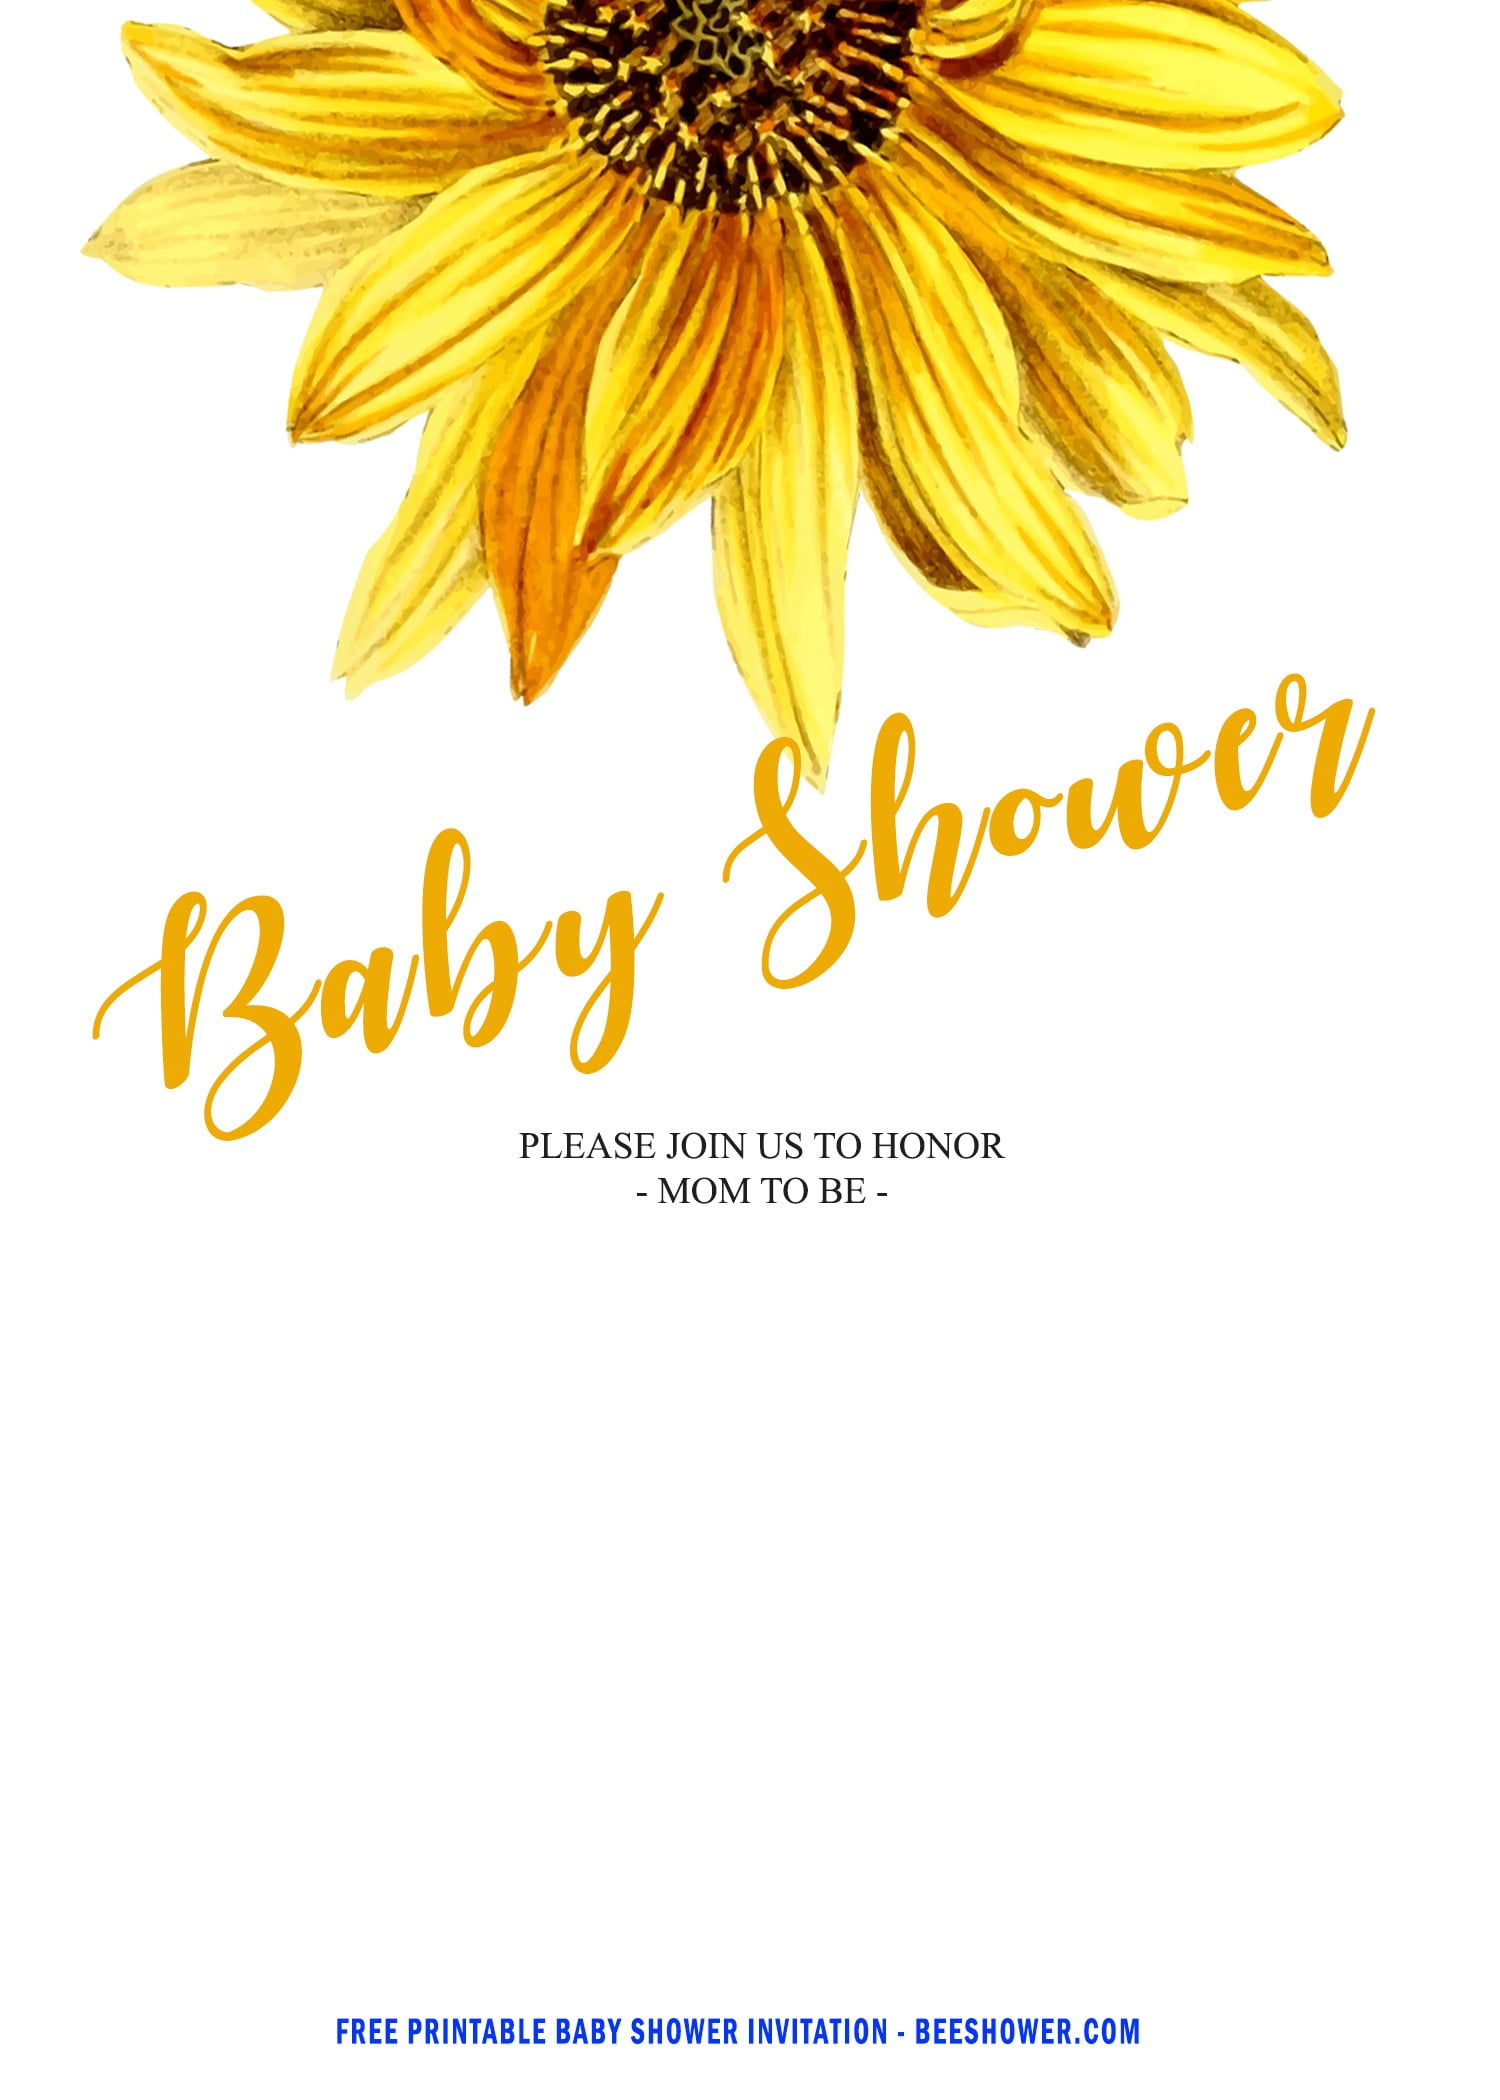 sunflower themed baby shower invitations